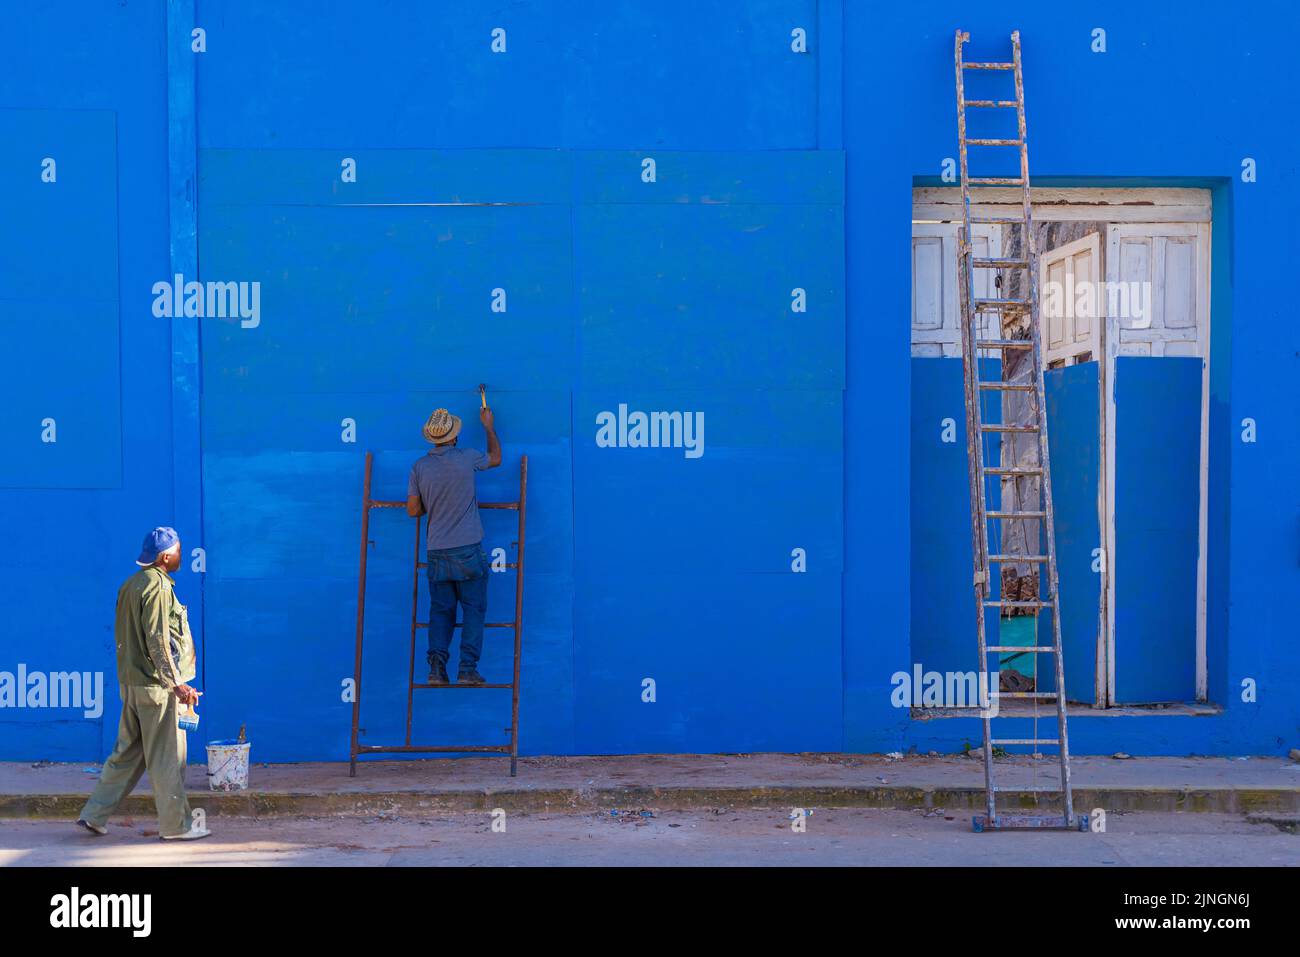 TRINIDAD, CUBA - JANUARY 7: Cubans painting a blue wall in Trinidad on January 7, 2021. Stock Photo